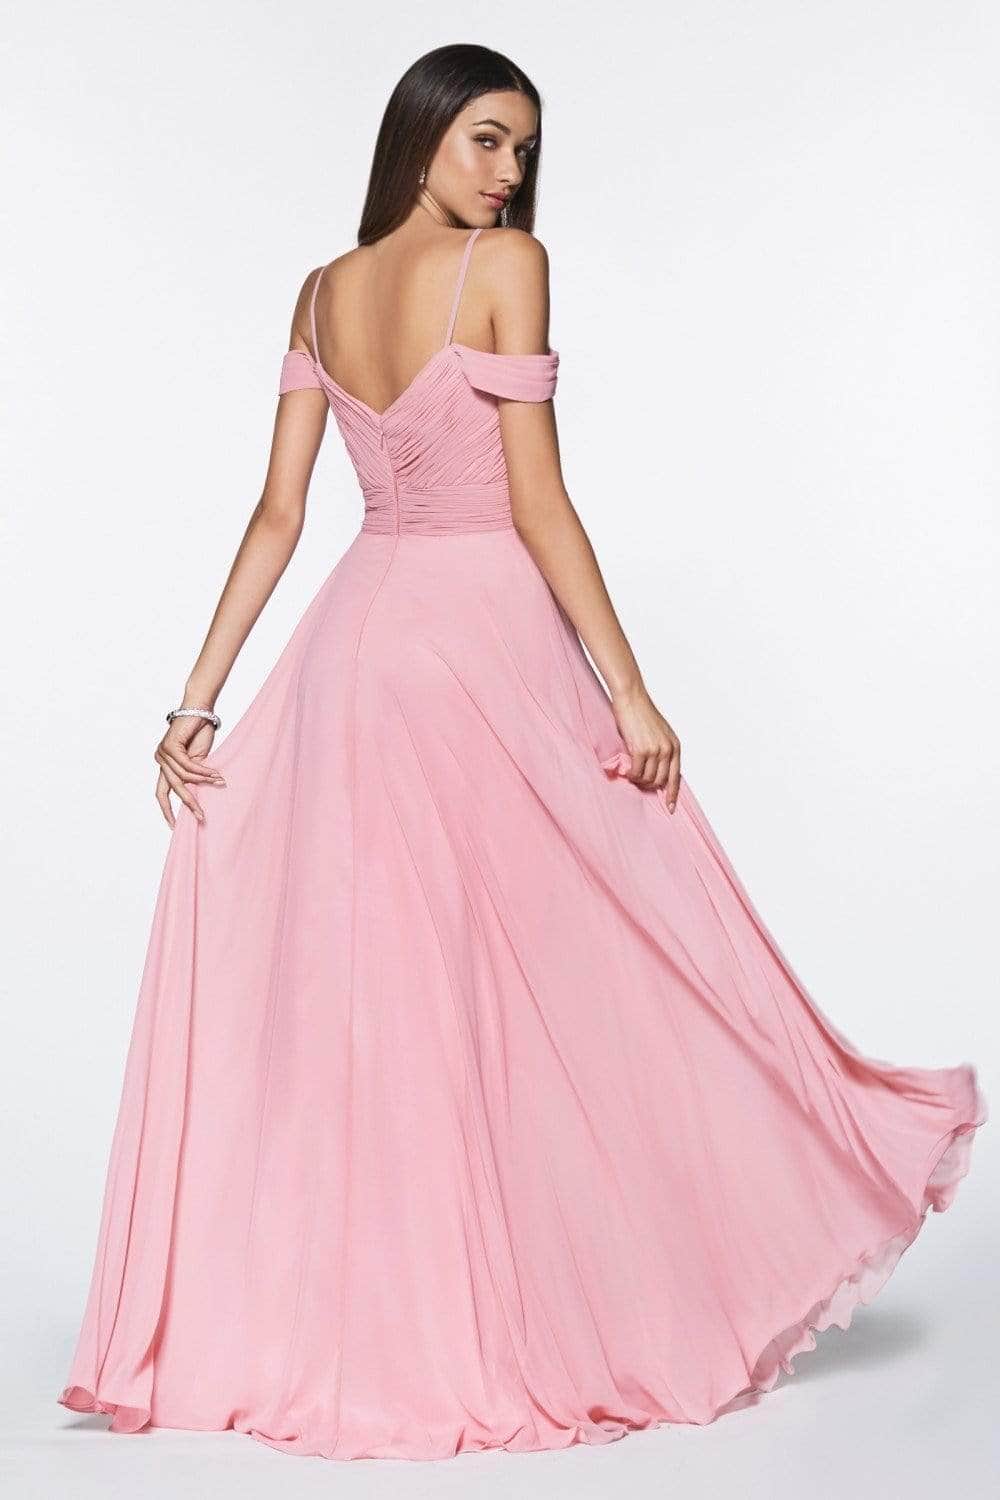 Ladivine CJ241 Prom Dresses